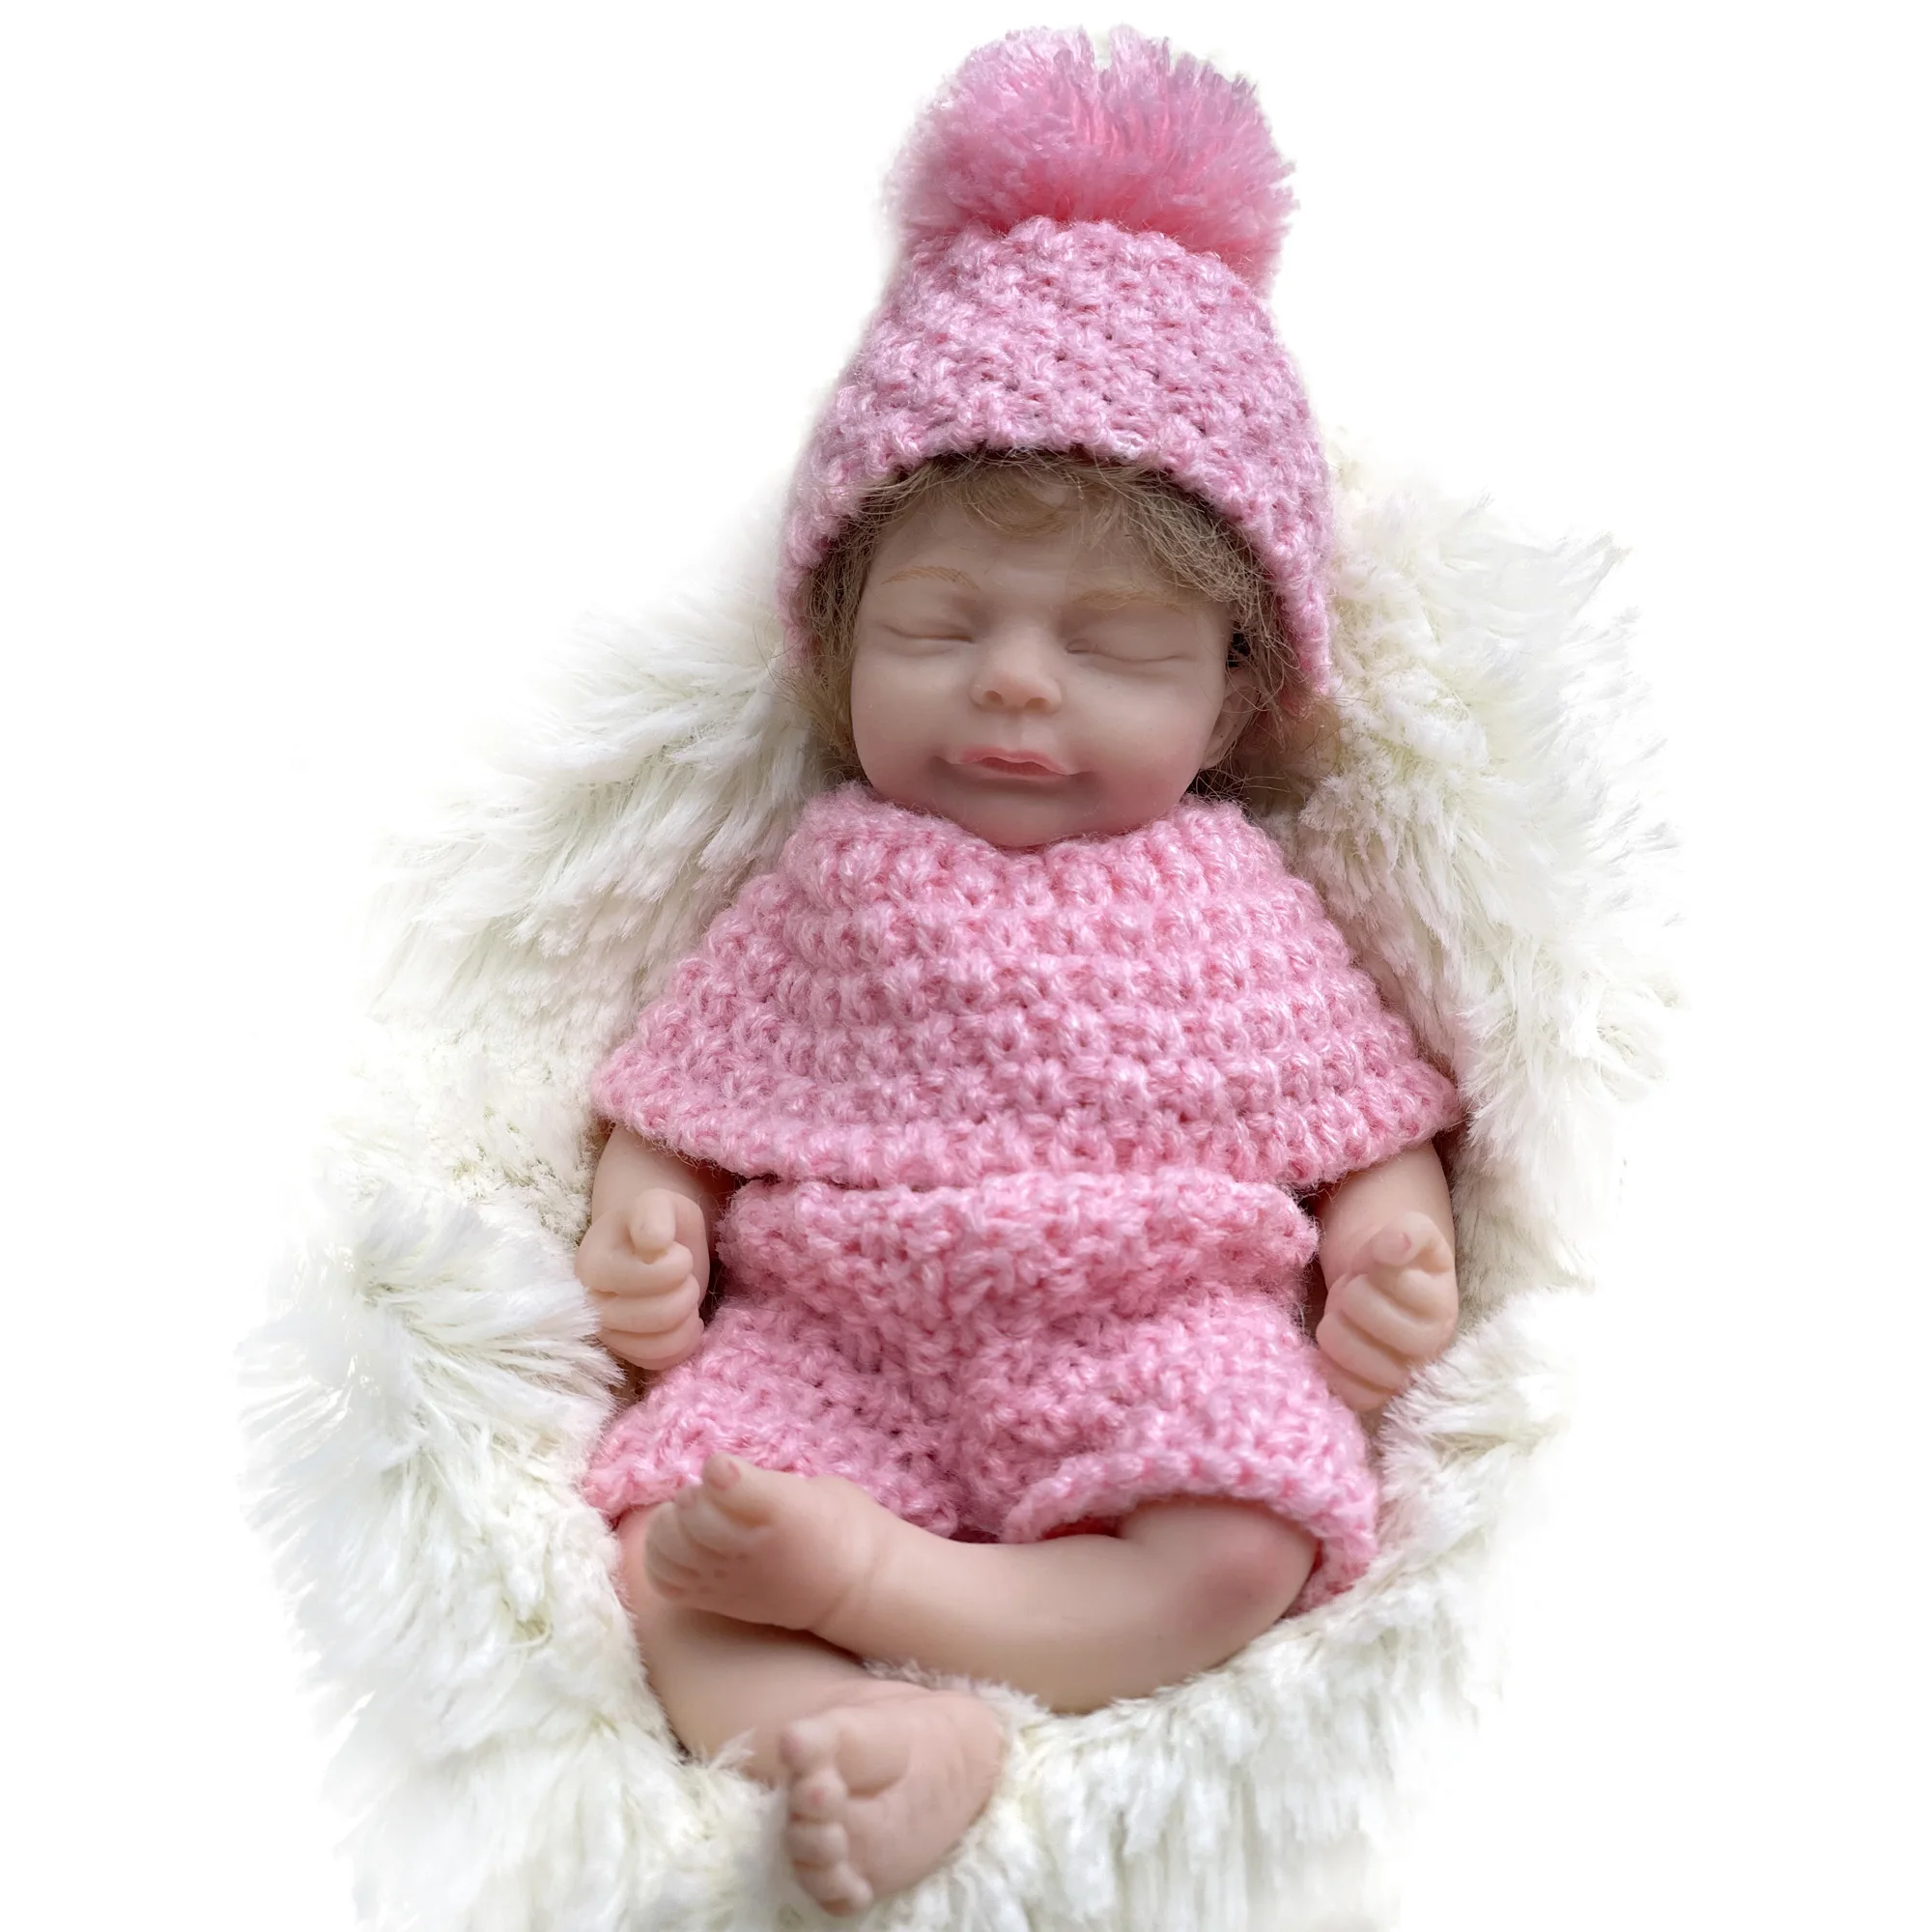 6 Inch Silicone Reborn Dolls Baby Soft Skin Mini Realistic Bebê Reborn De Silicone МИНИ-РЕБОРНЫ СИЛИКОНОВЫЕ КУКЛЫ Muñecas Reborn